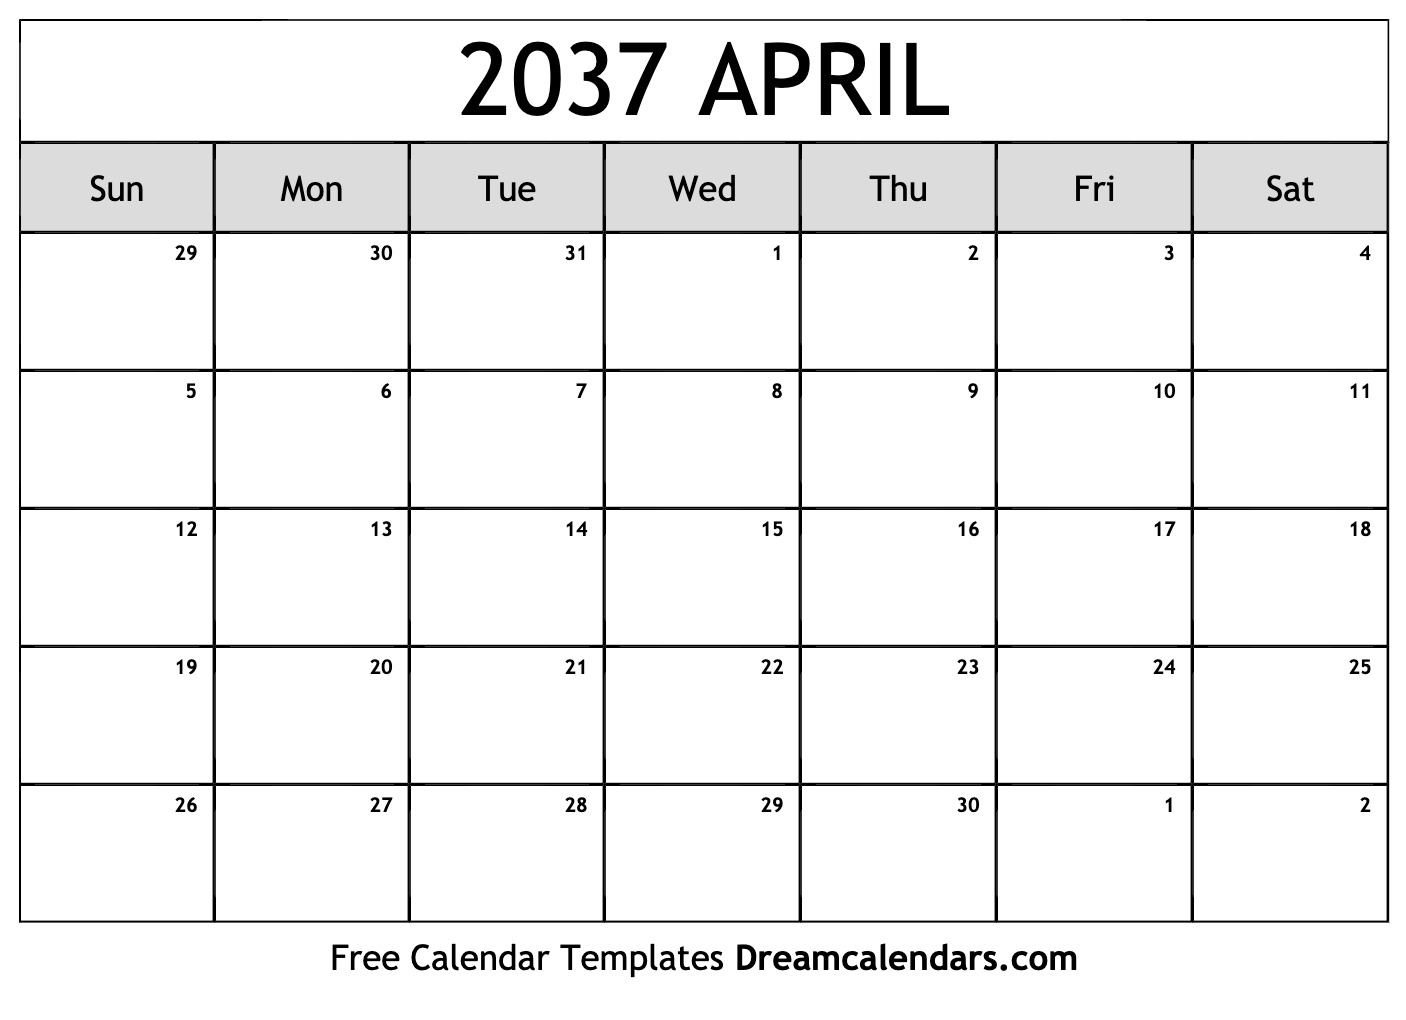 April 2037 calendar